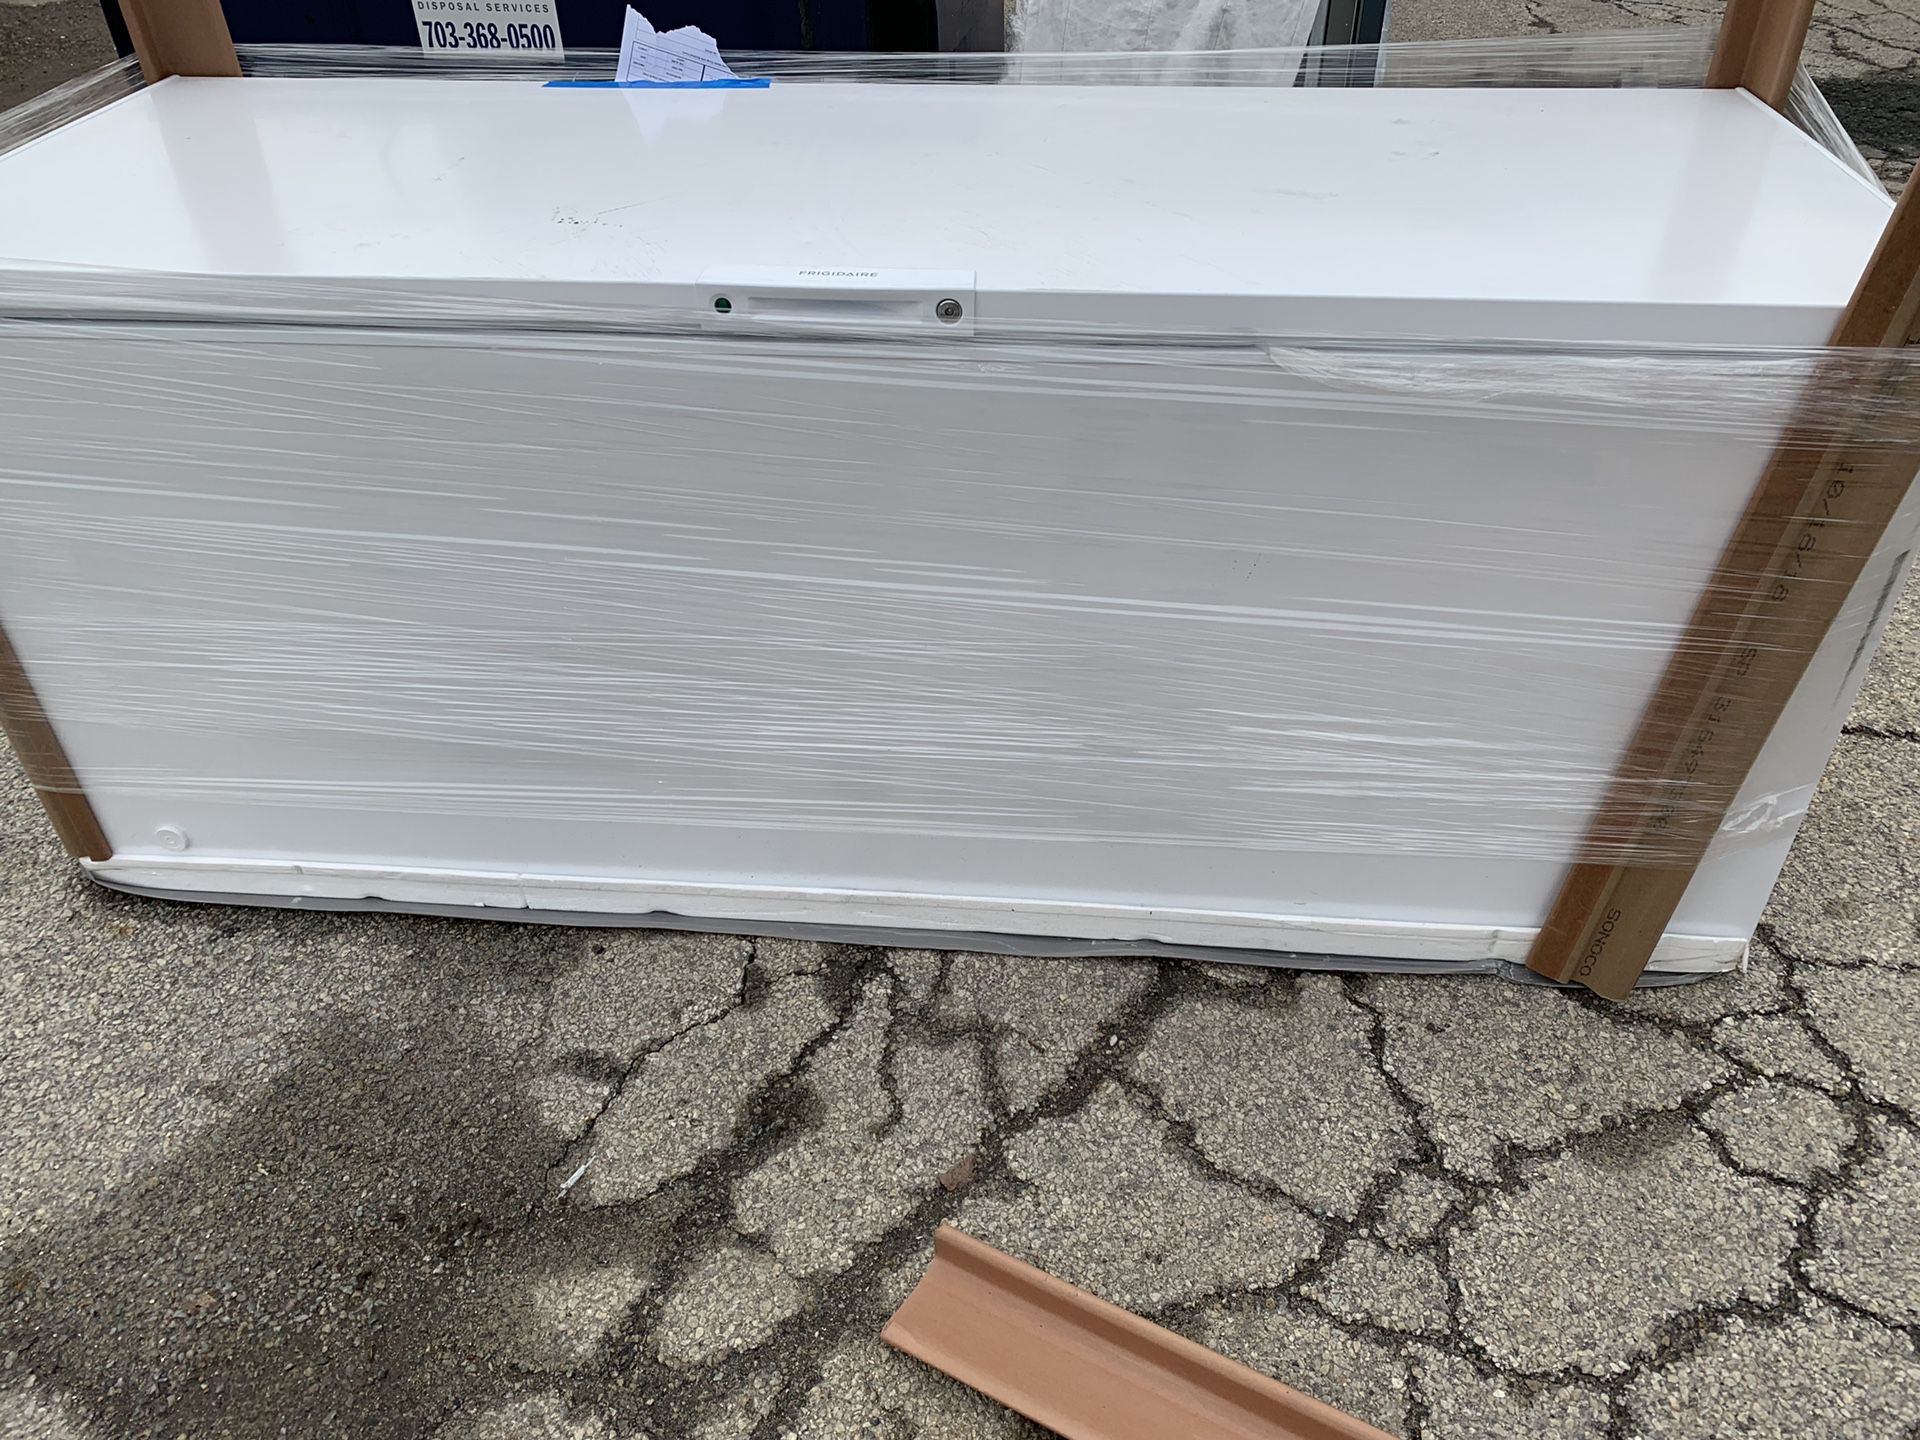 New Frigidaire chest freezer 24 cubic feet with one year warranty